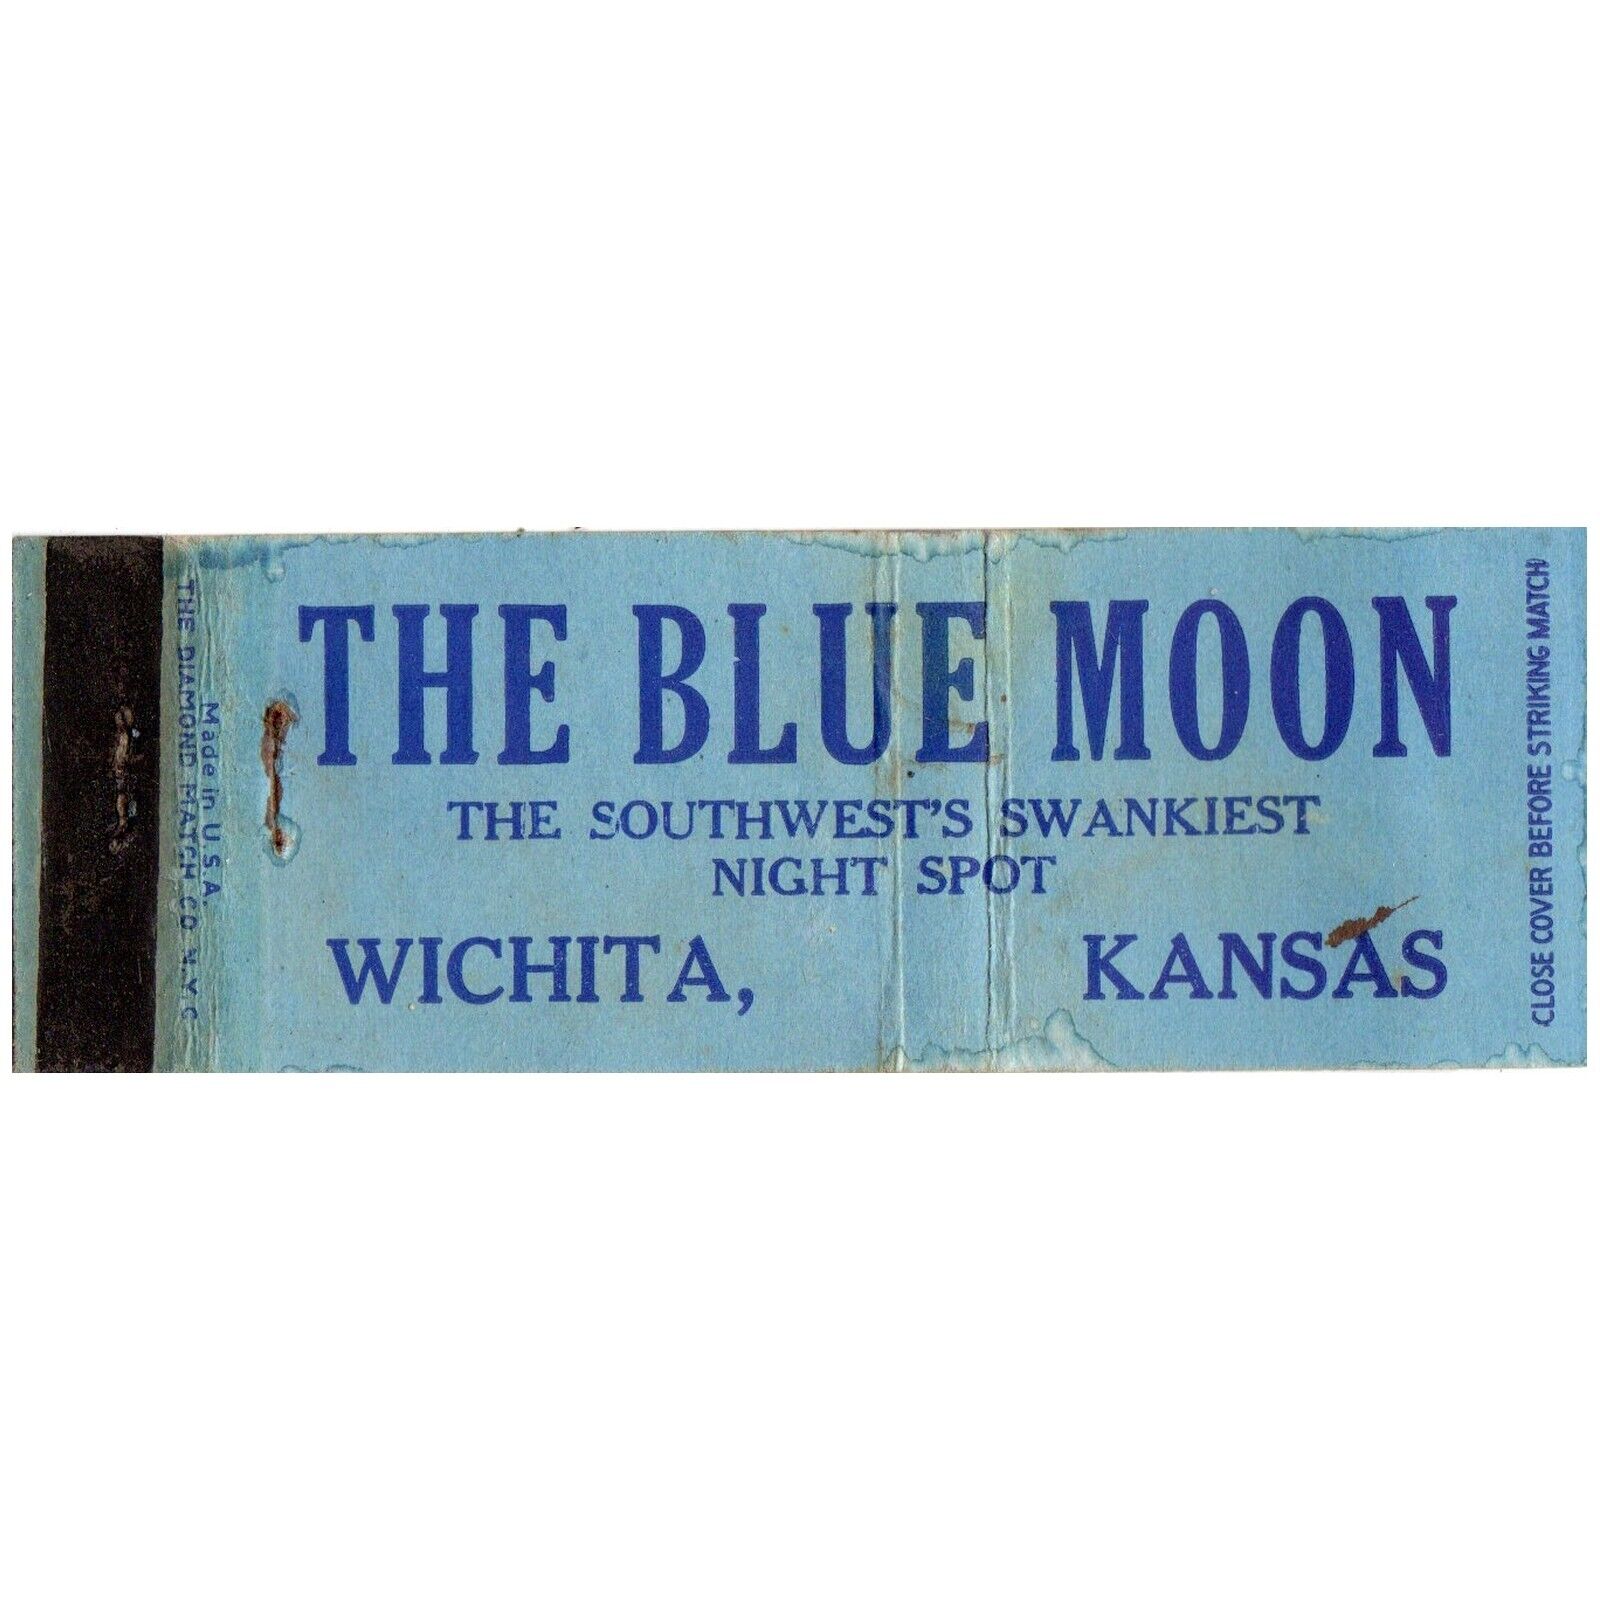 Vintage Matchbook Cover The Blue Moon Wichita Kansas 1940s nightclub full length